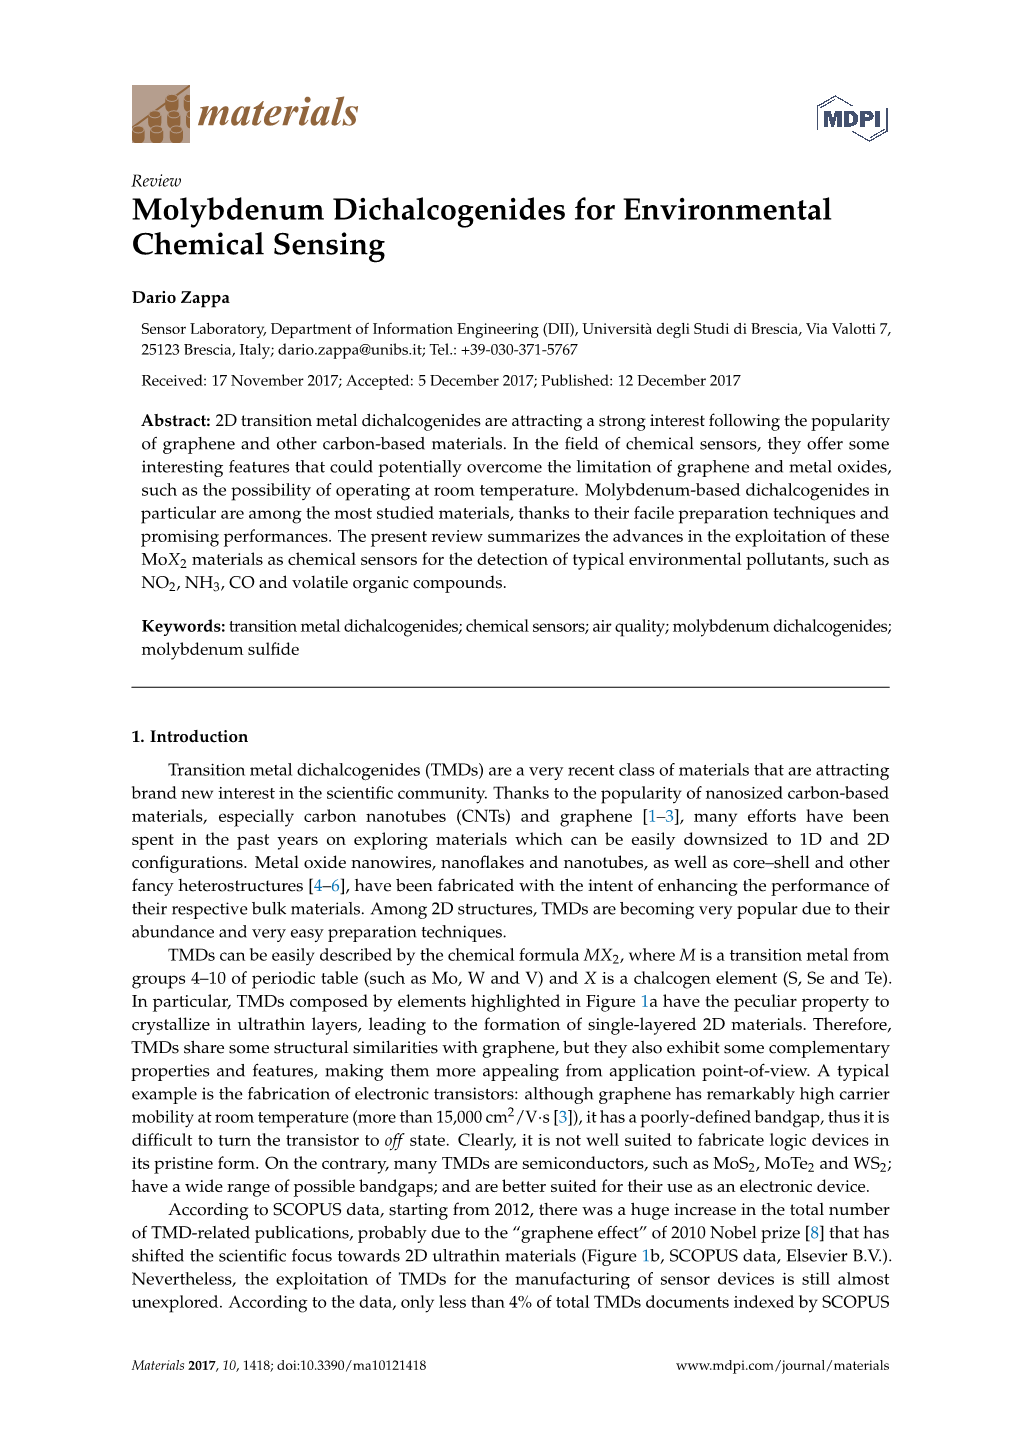 Molybdenum Dichalcogenides for Environmental Chemical Sensing